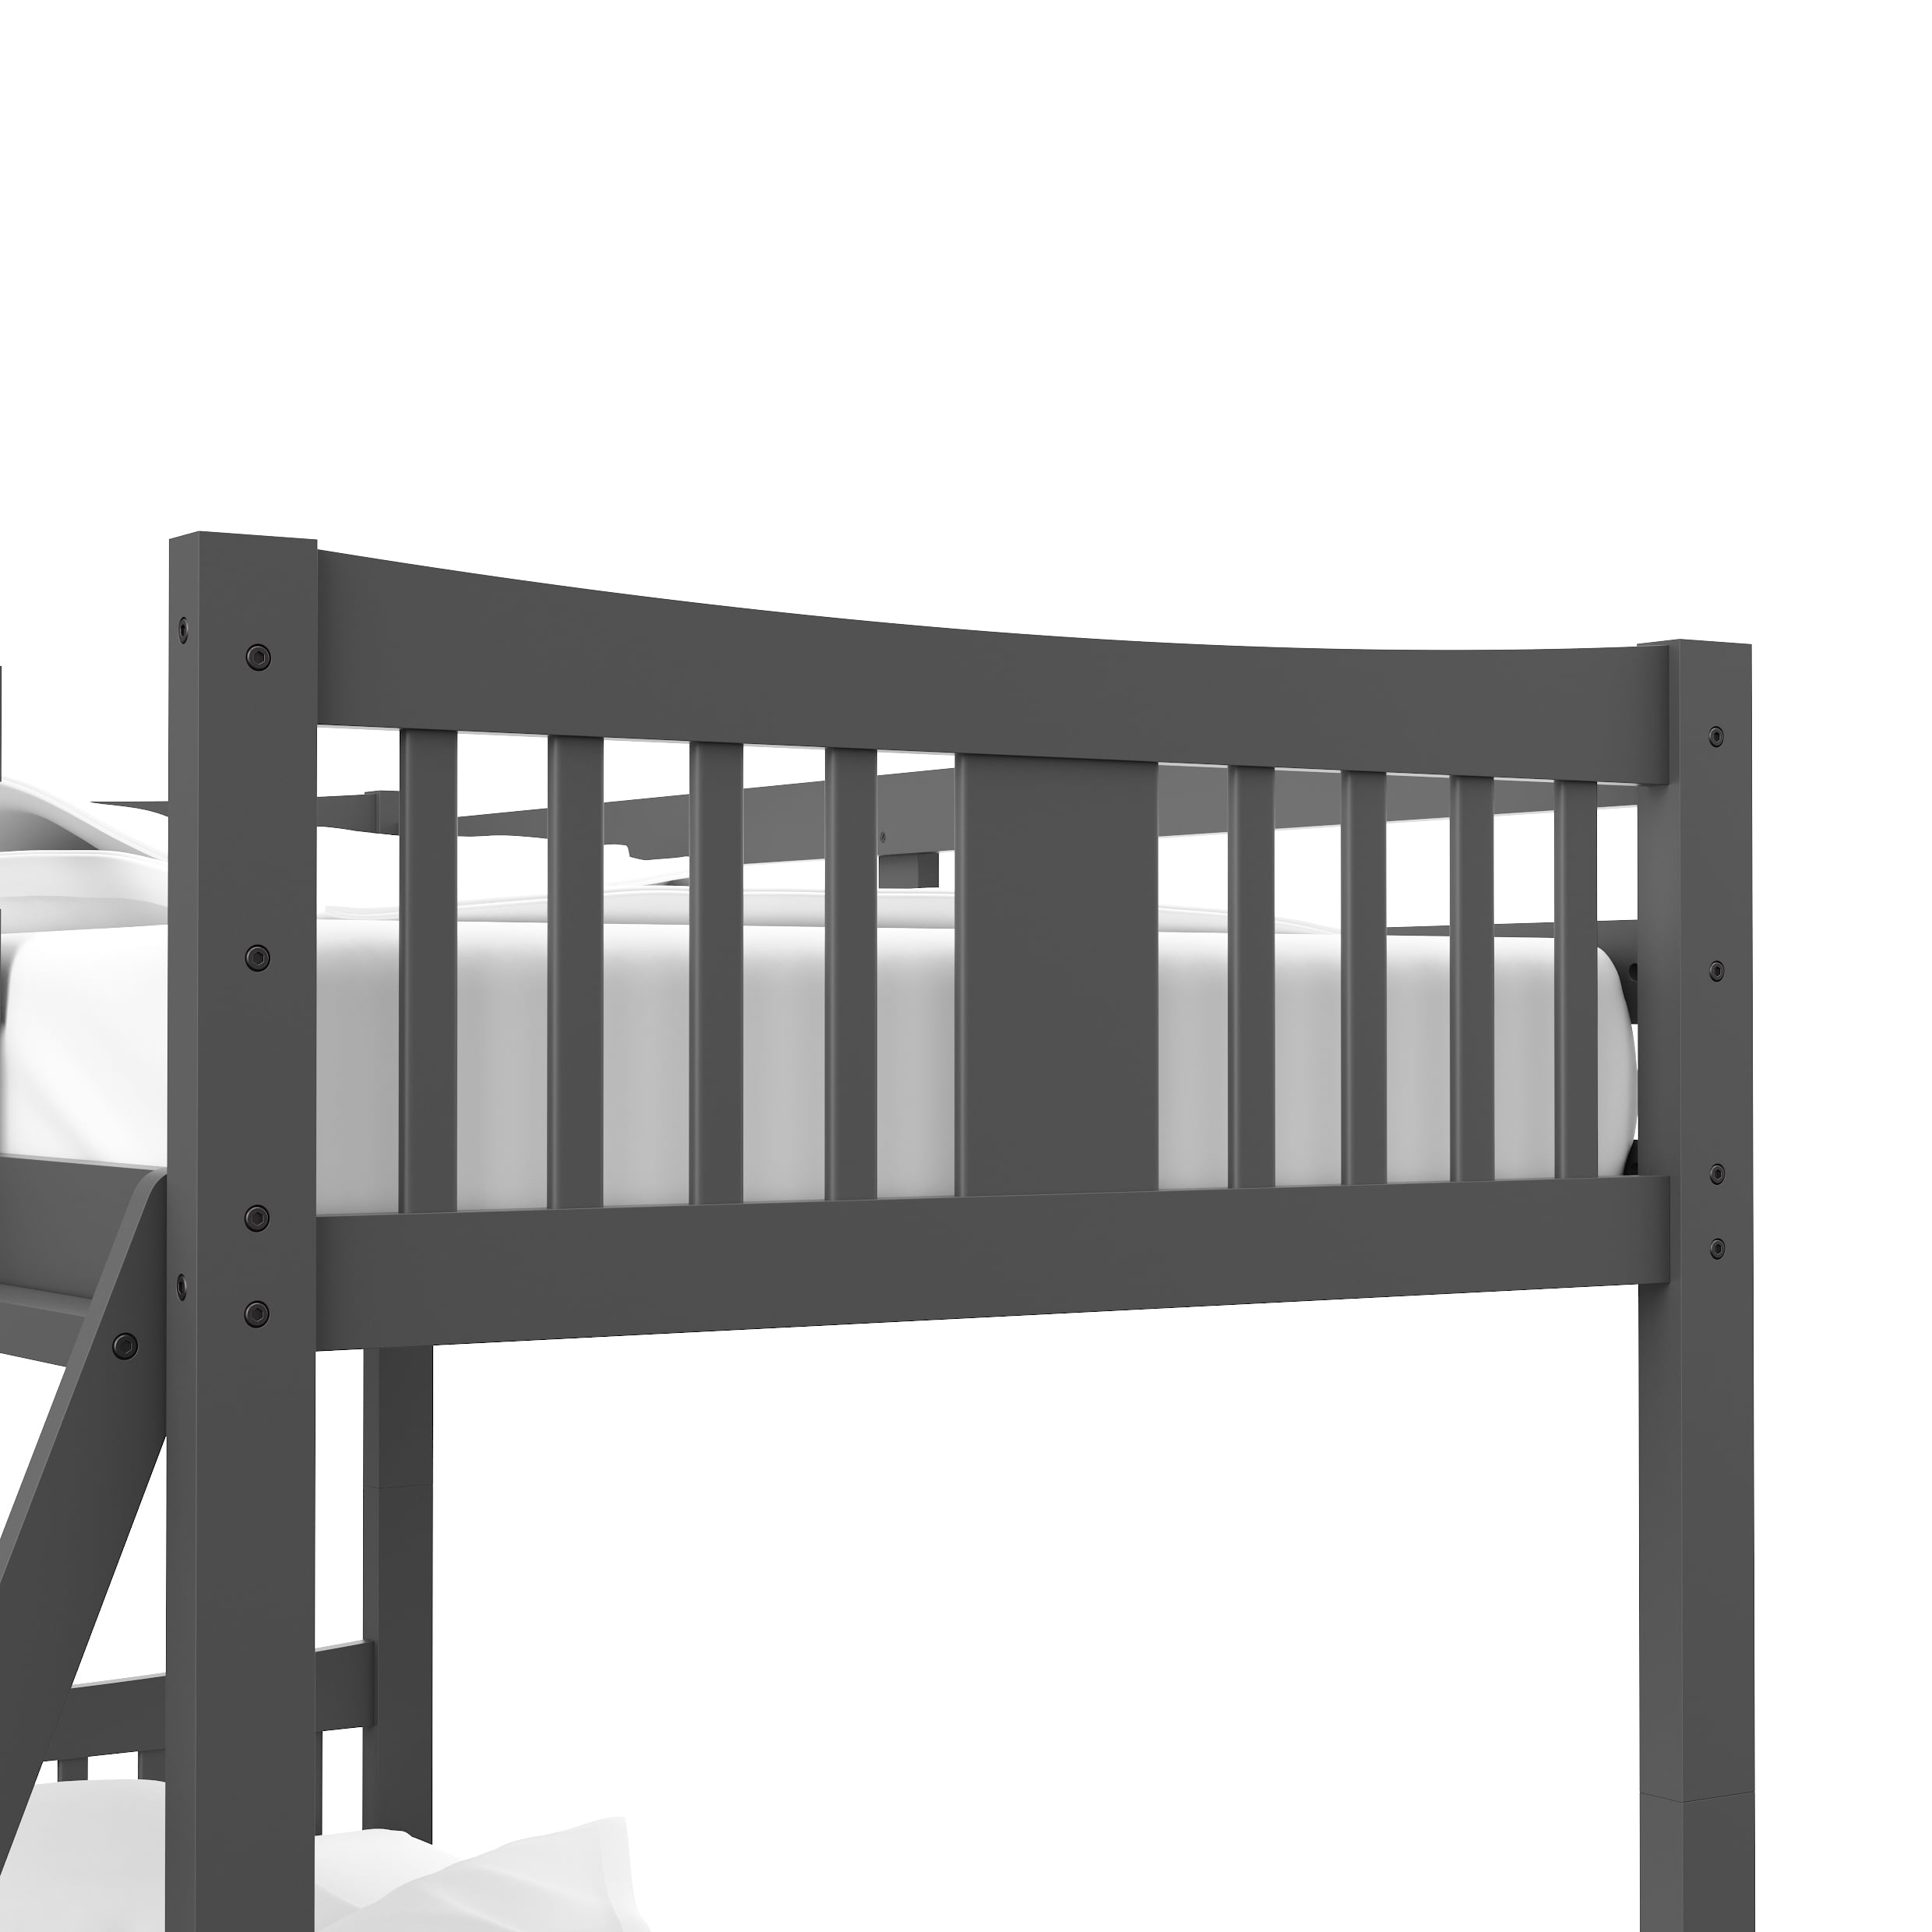 storkcraft bunk bed